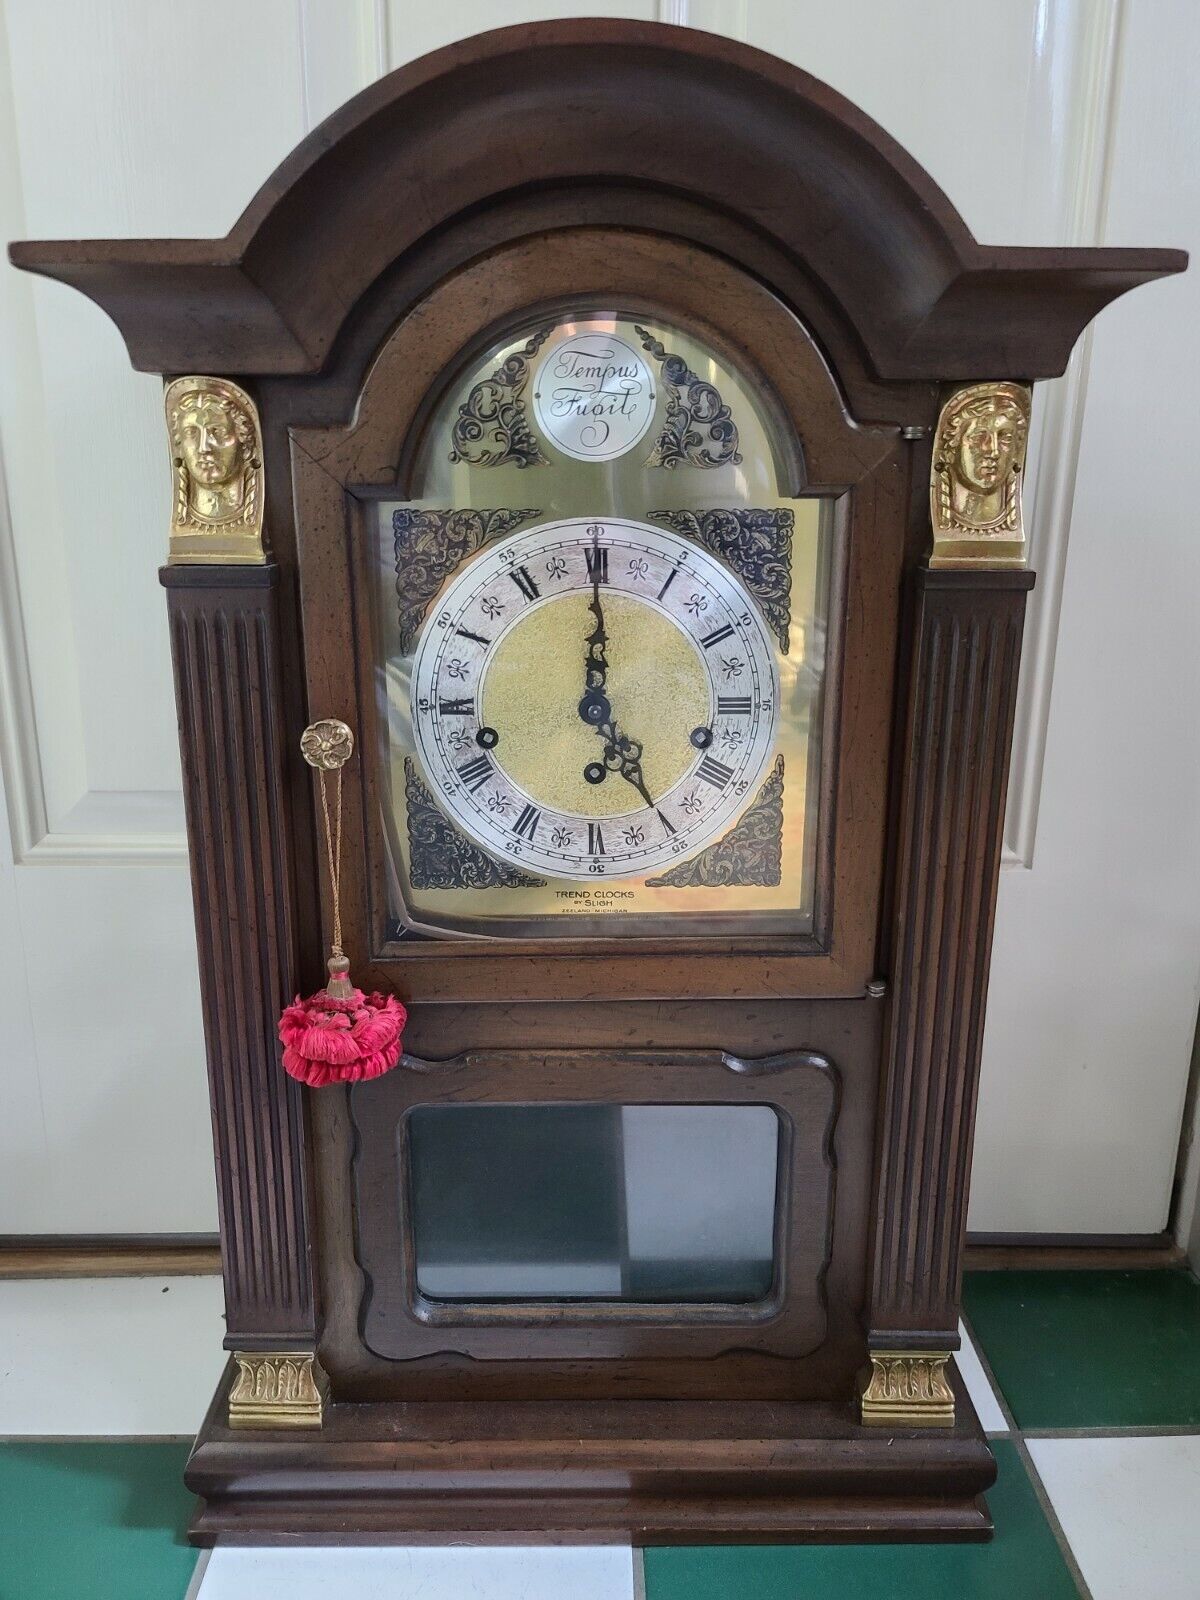 Sligh Trend Mahogany Mantel Clock, Tempus Fugit, style #801, movement #101